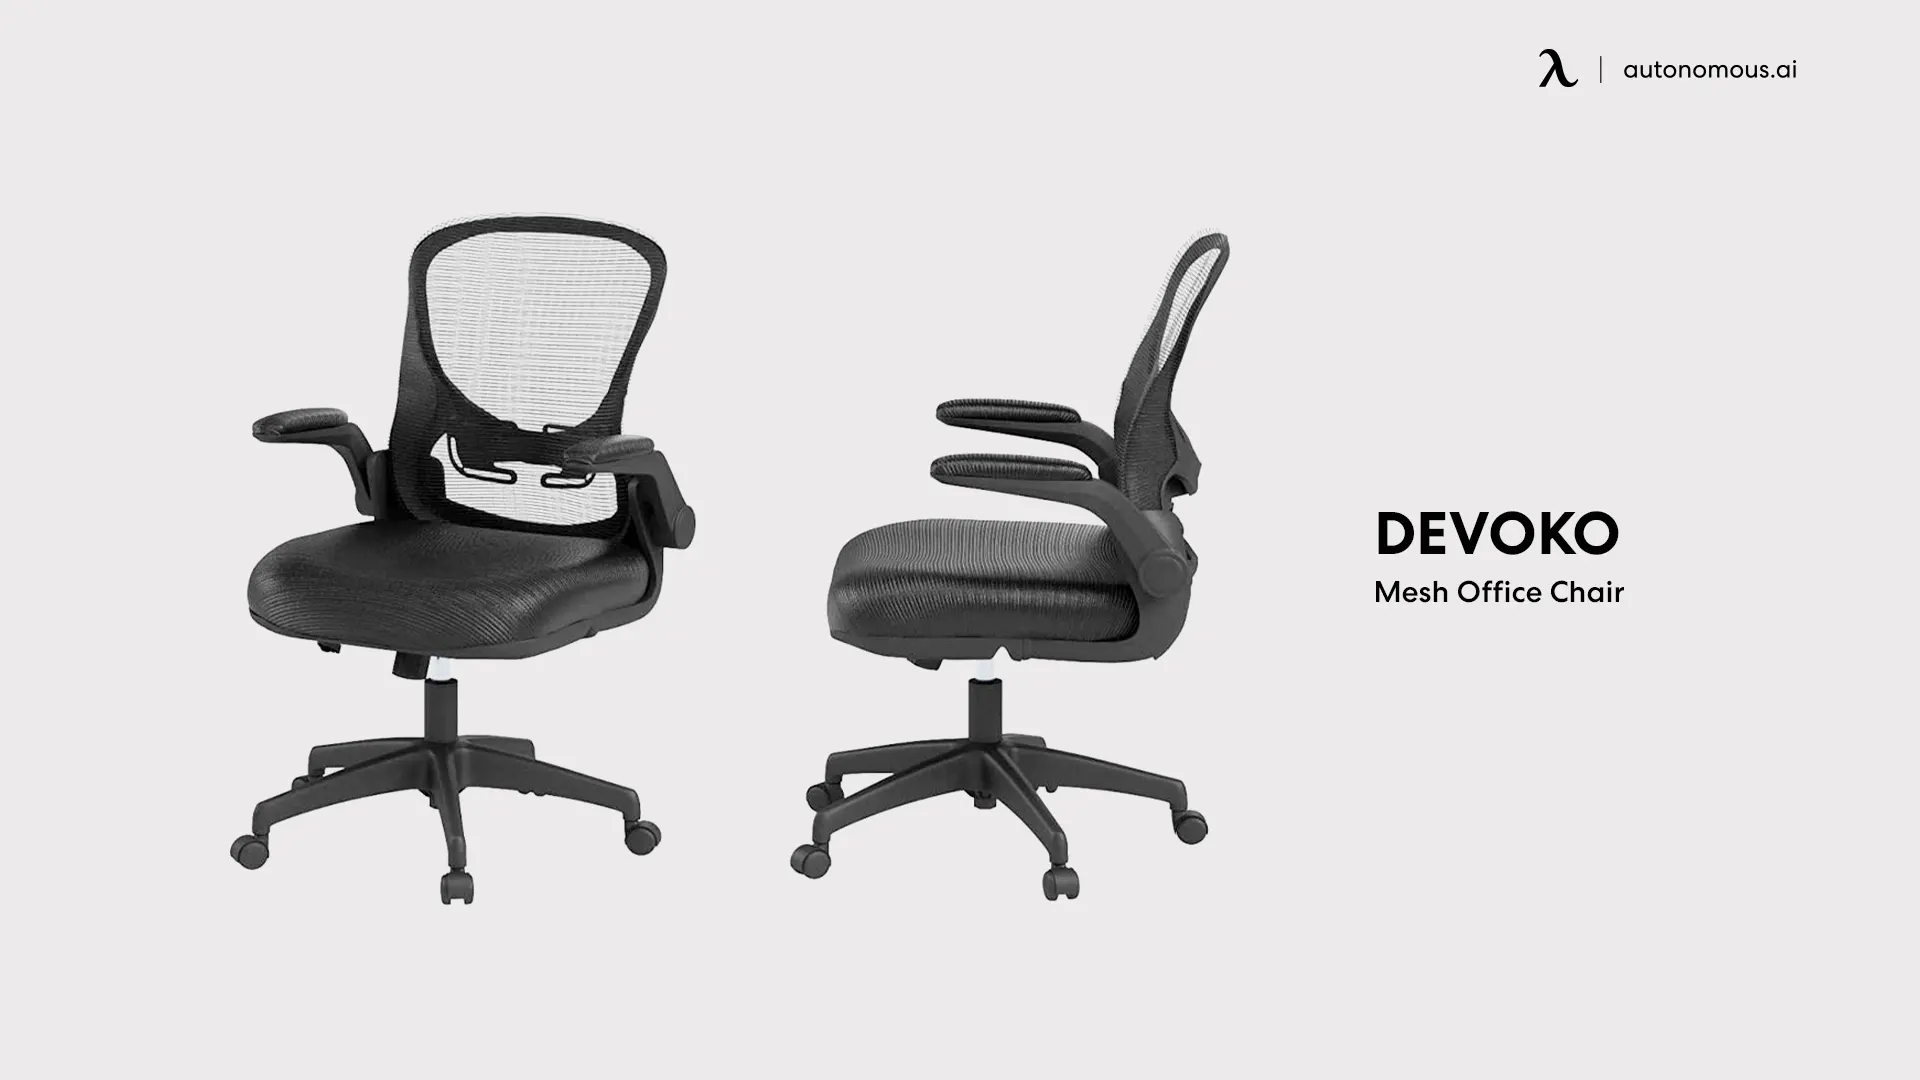 Devoko Mesh Office Chair